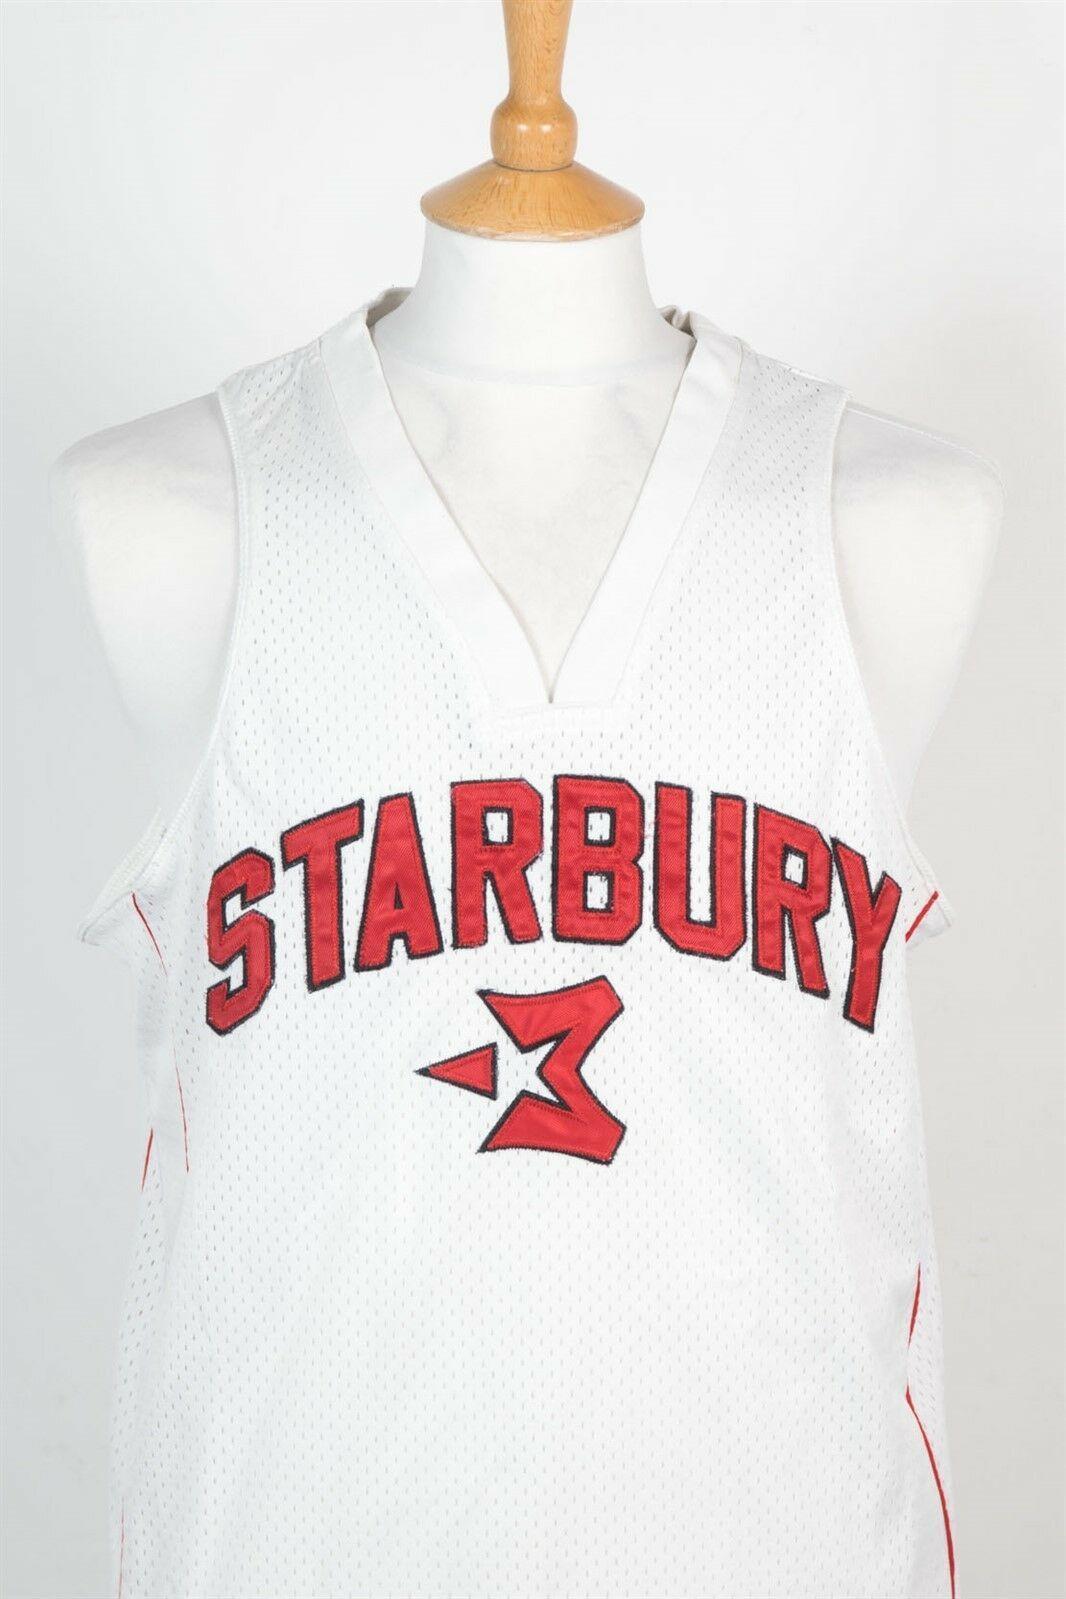 Starbury Logo - RETRO 00'S STARBURY STEPHON MARBURY BASKETBALL JERSEY VEST #3 ...